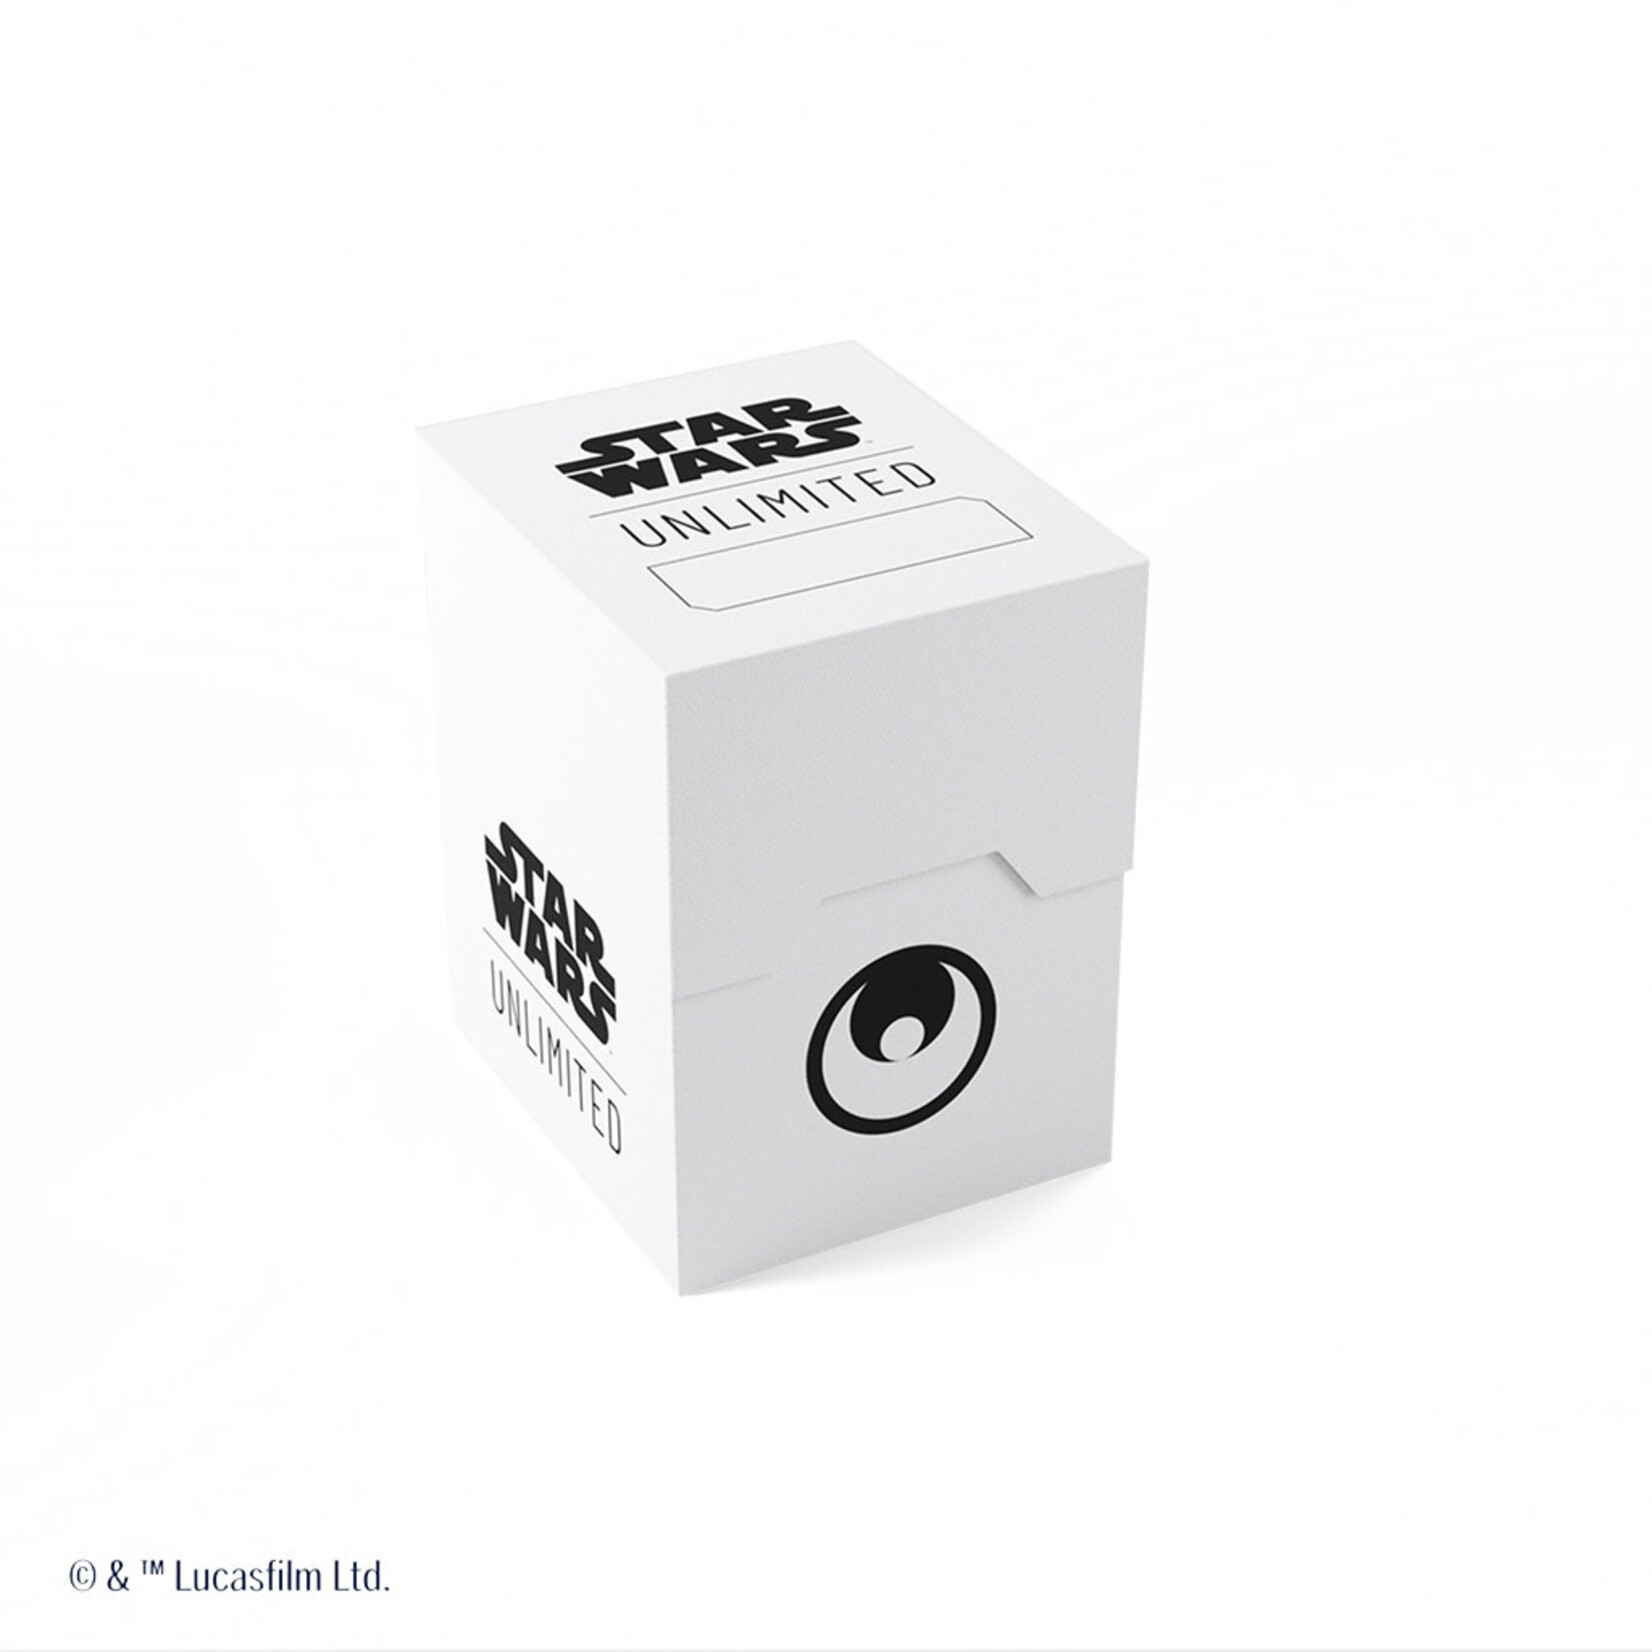 Fantasy Flight Games Star Wars: Unlimited Soft Crate - White/Black